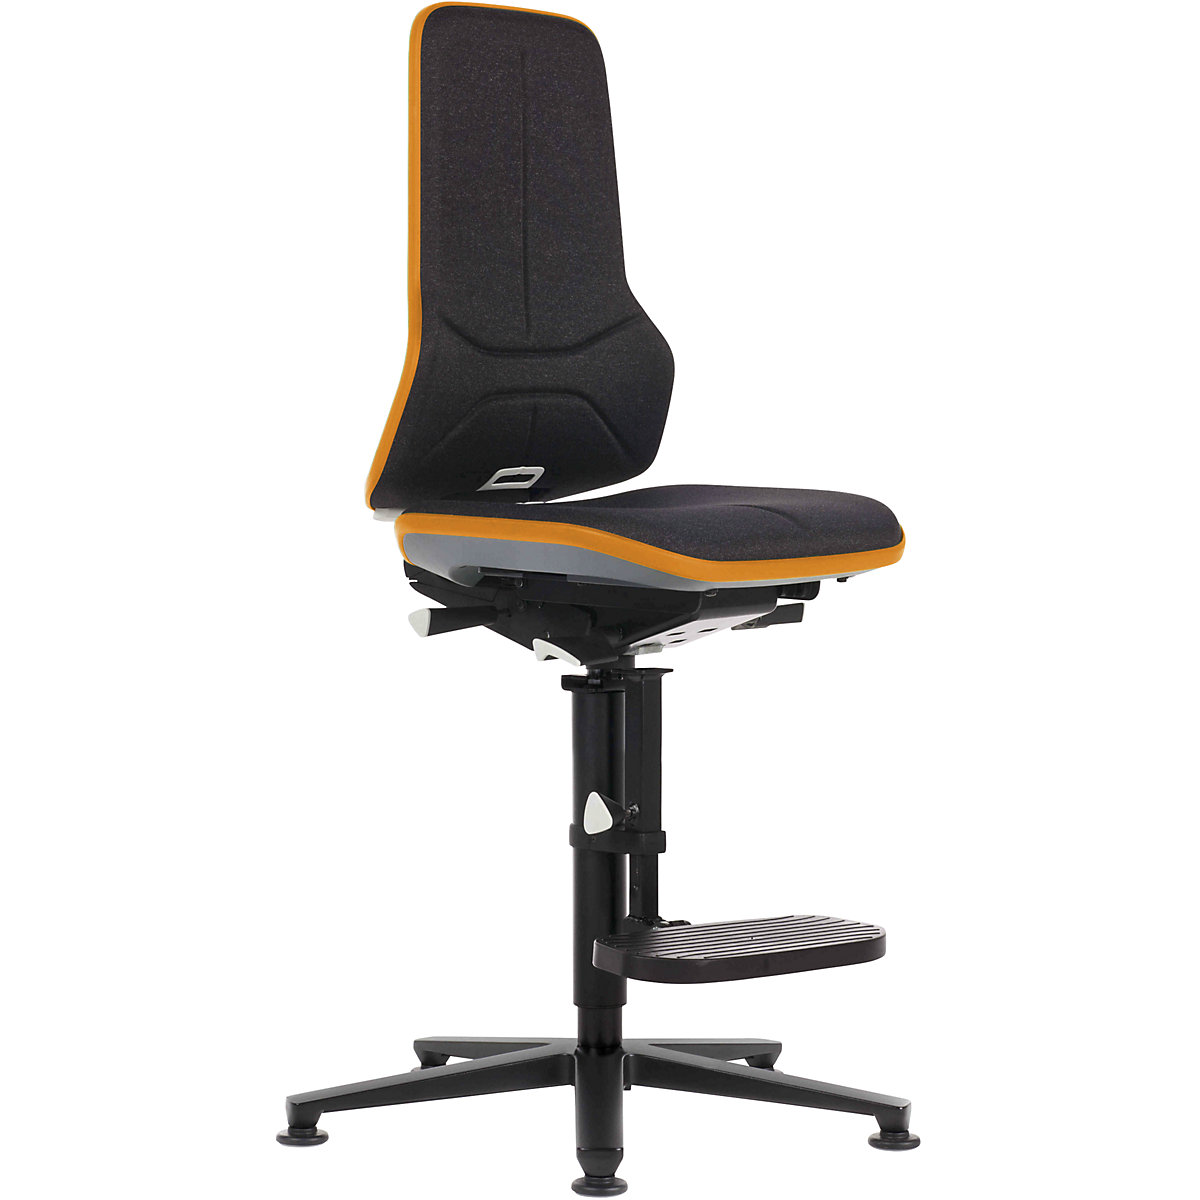 Radna okretna stolica NEON, kliznik, podrška za penjanje – bimos, stalni kontakt, tkanina, fleksibilna traka u narančastoj boji-10